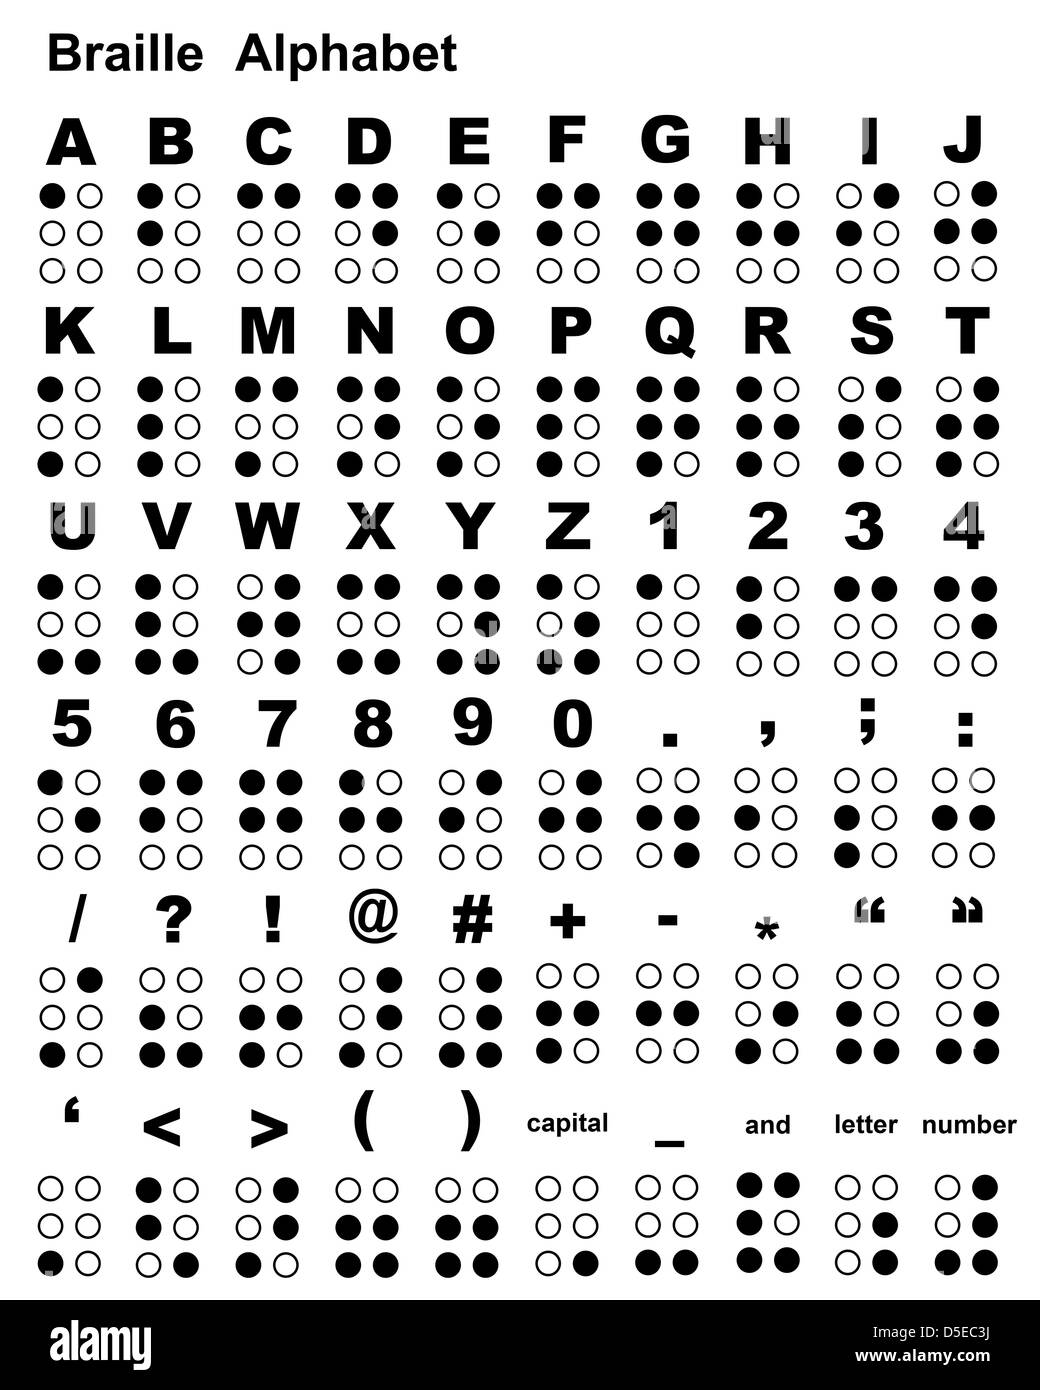 printable-braille-alphabet-free-printable-calendar